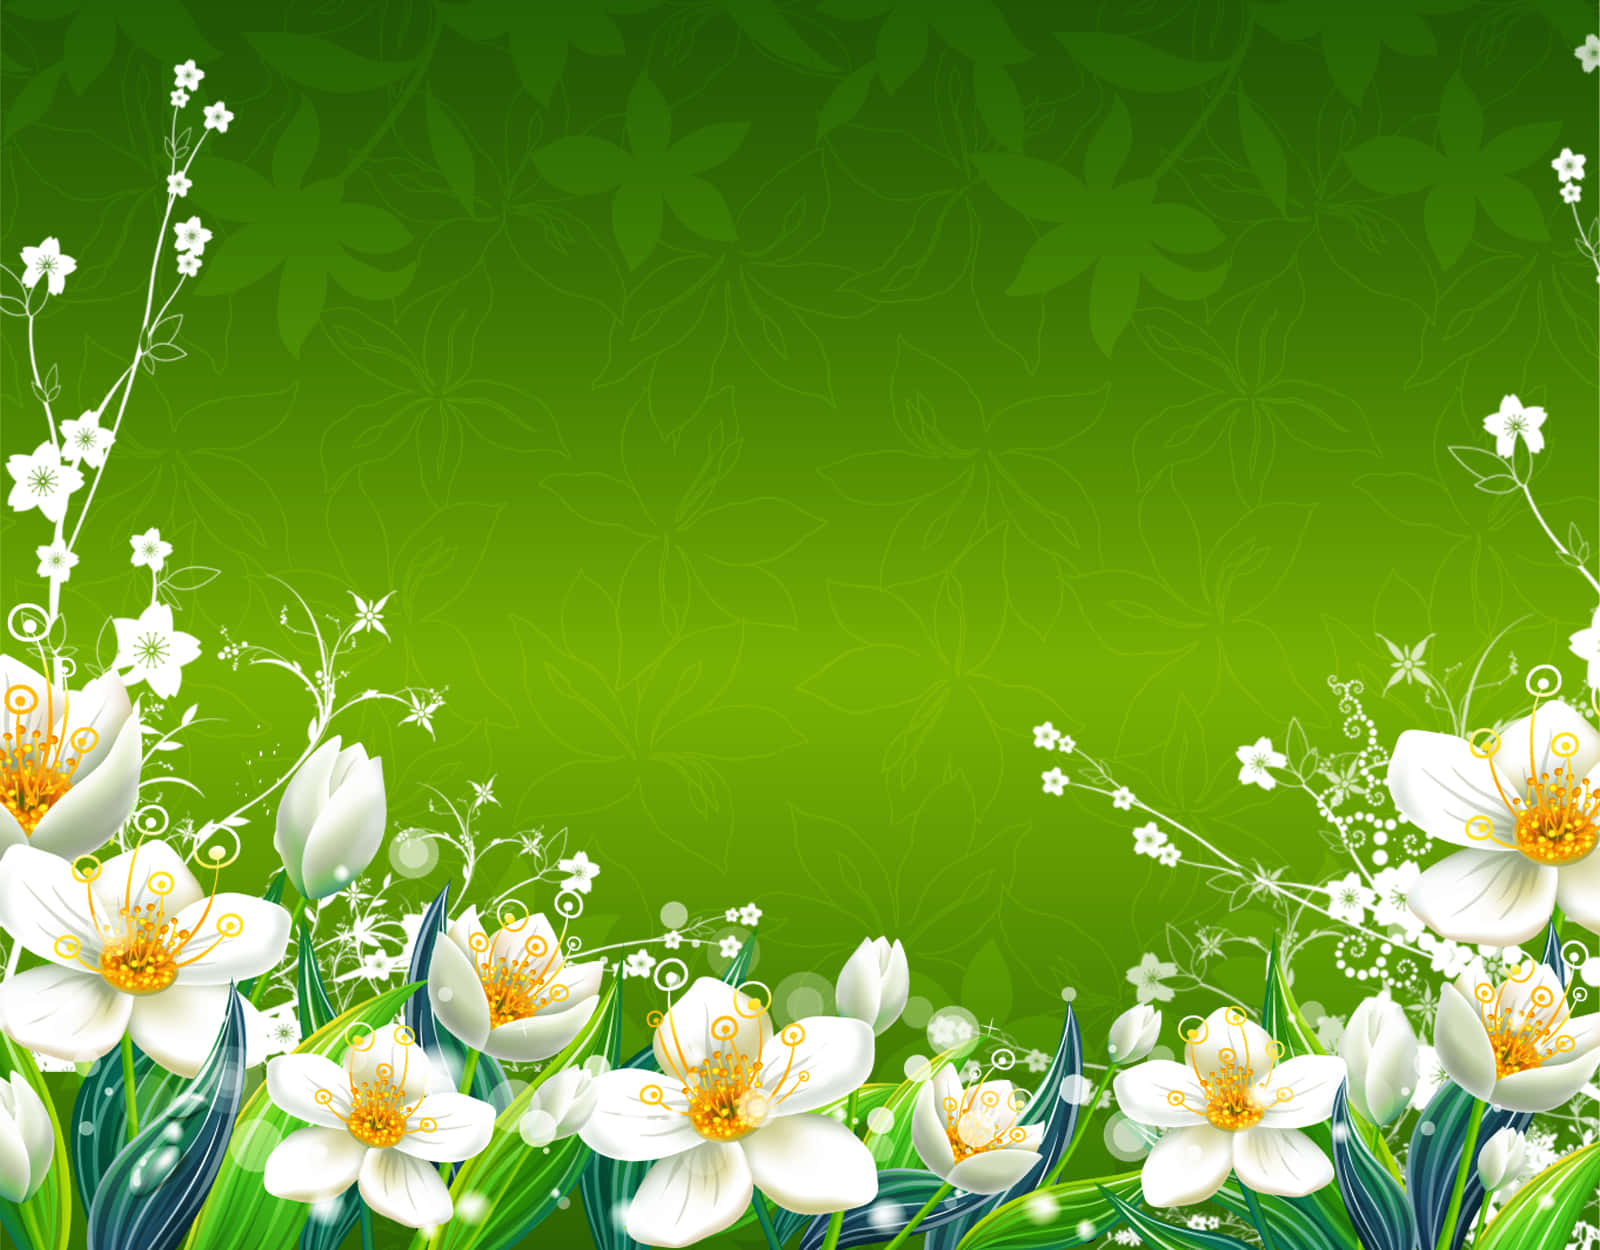 Green Background Images - Free Download on Freepik